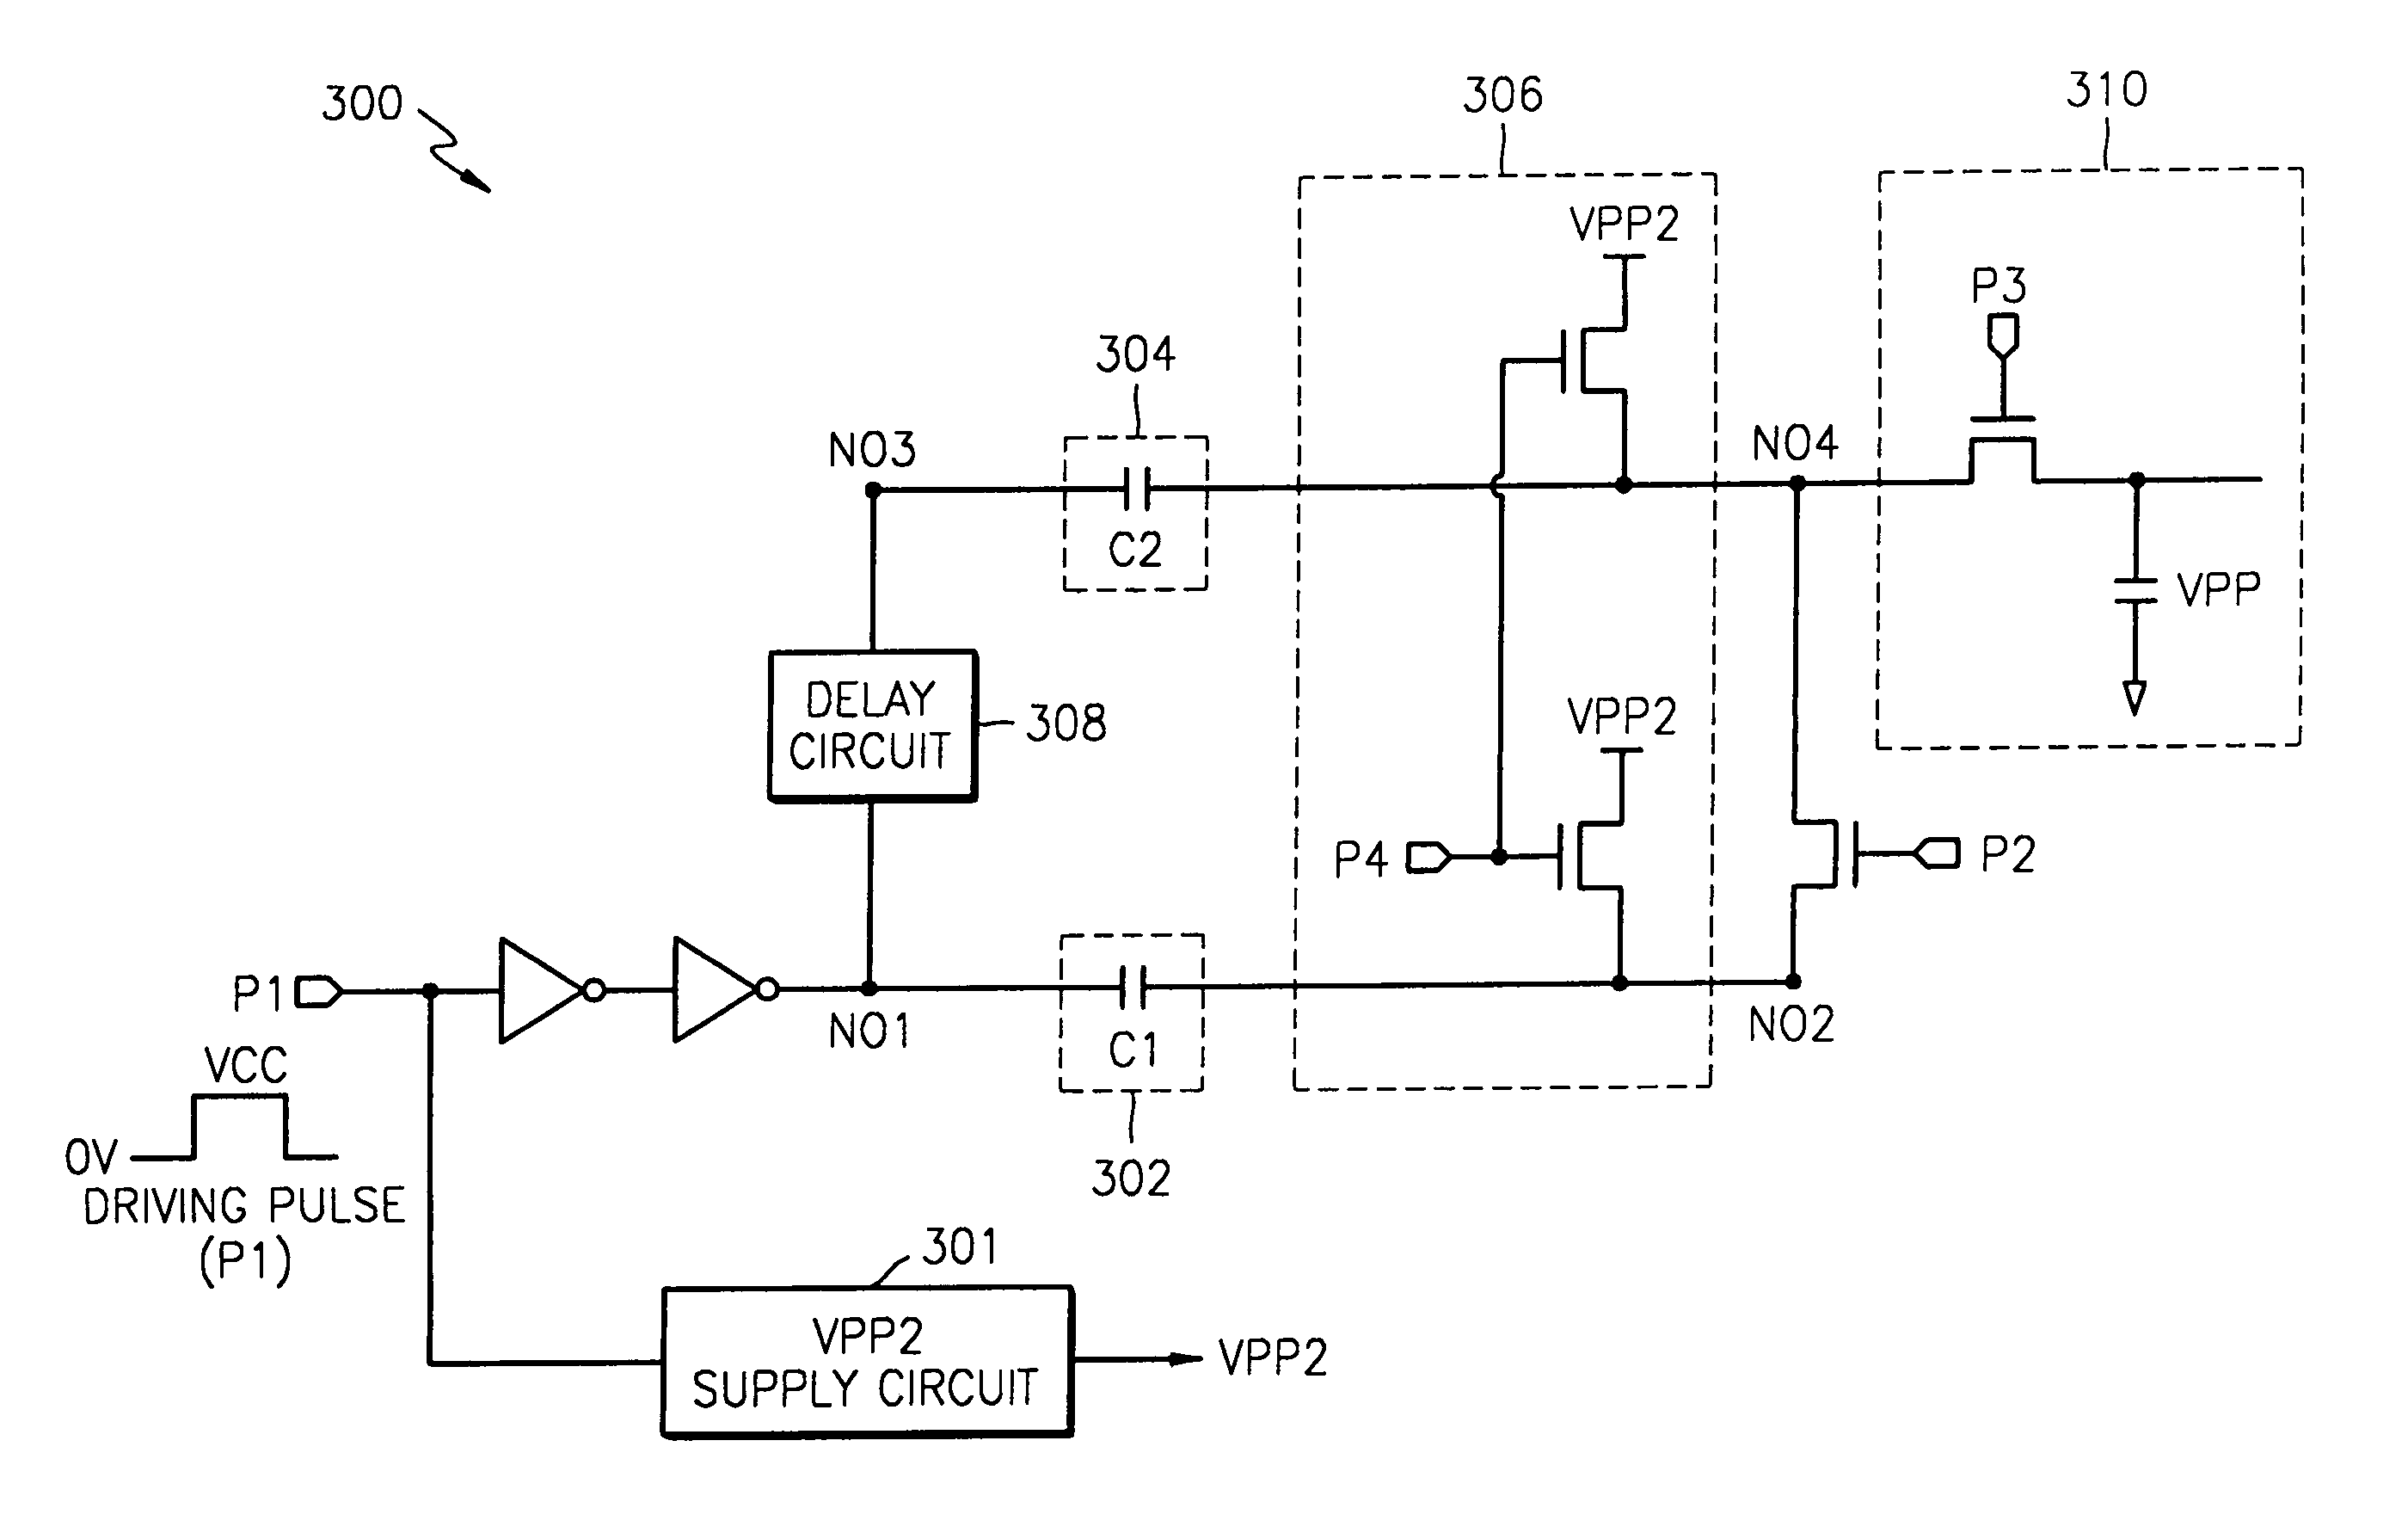 High voltage generator having separate voltage supply circuit